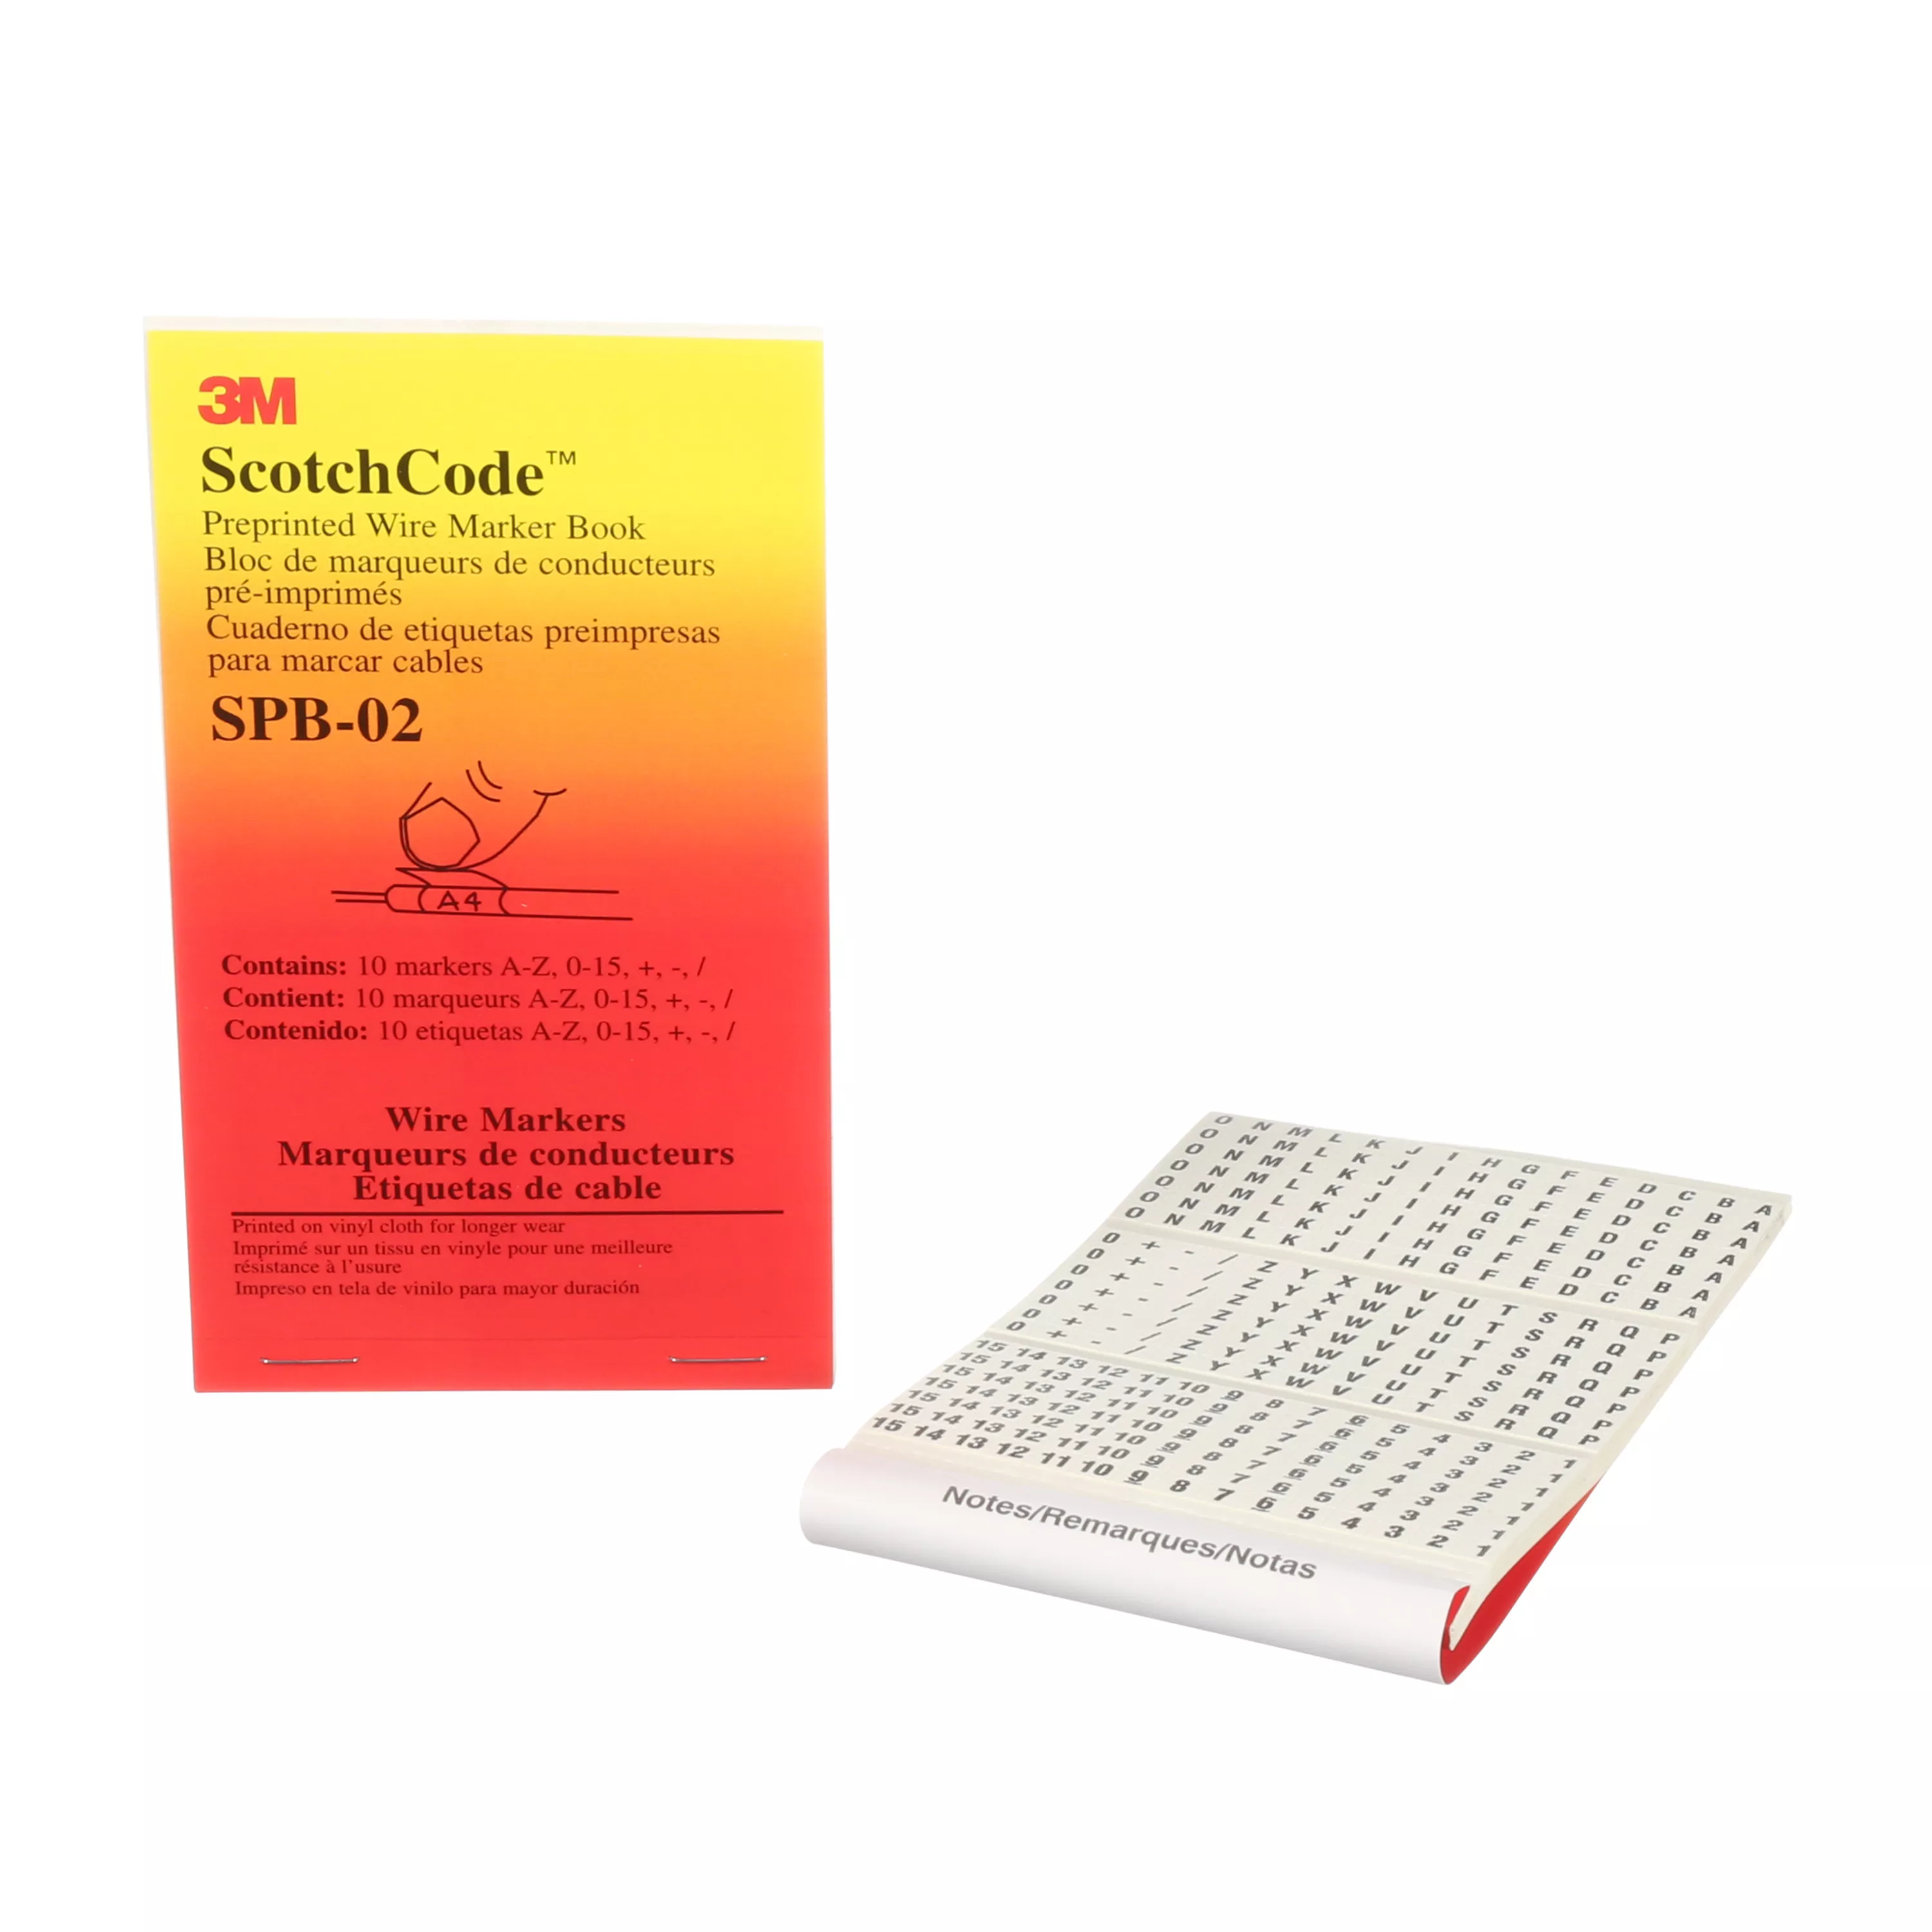 SKU 7000132479 | 3M™ ScotchCode™ Pre-Printed Wire Marker Book SPB-02